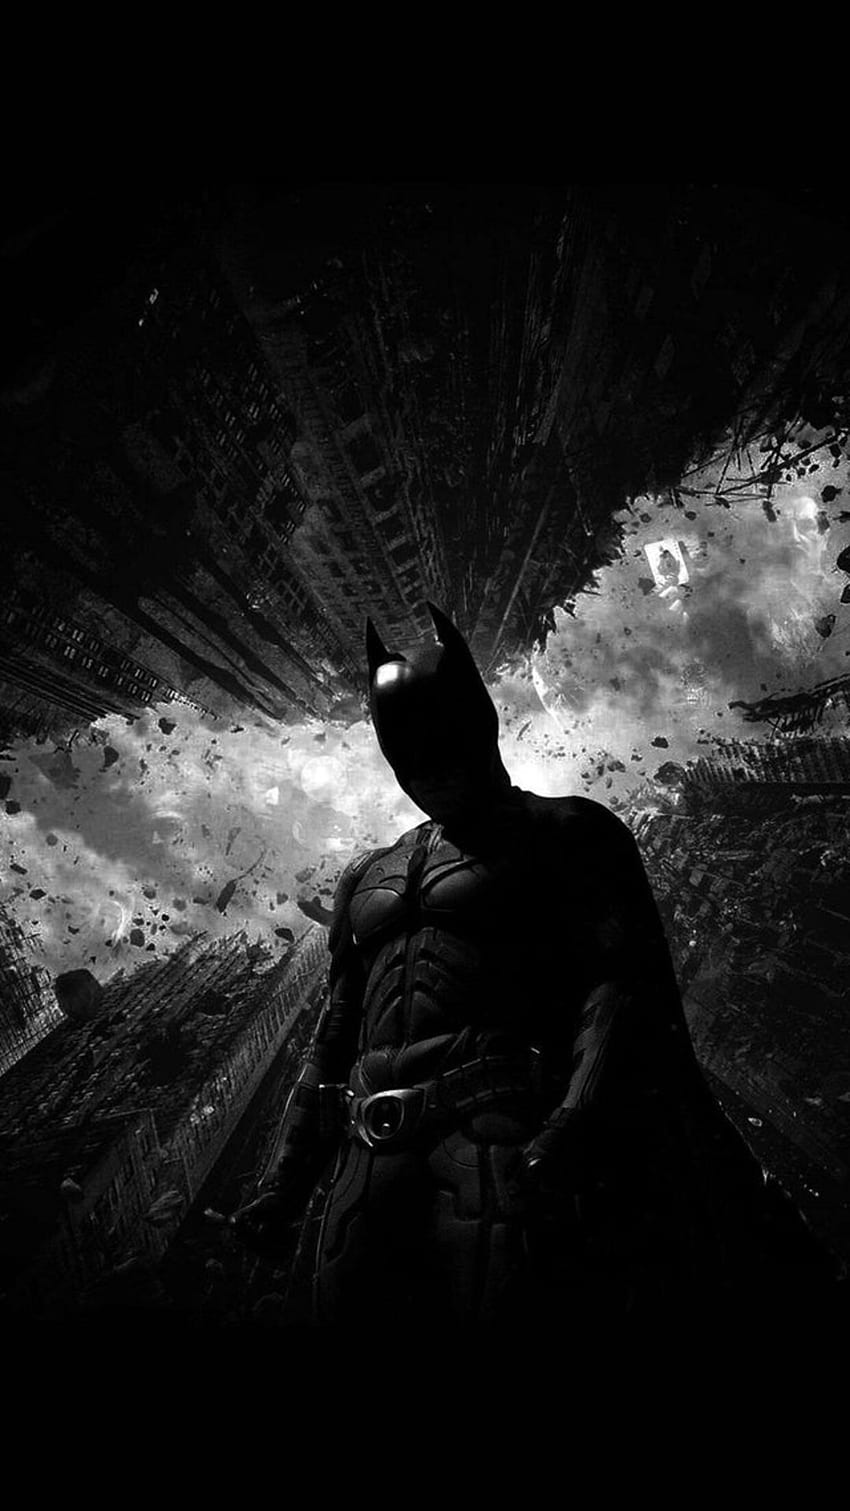  Batman Hintergrundbild 850x1511. Batman The Dark Knight For iPhone Background, The Dark Knight Mobile HD phone wallpaper